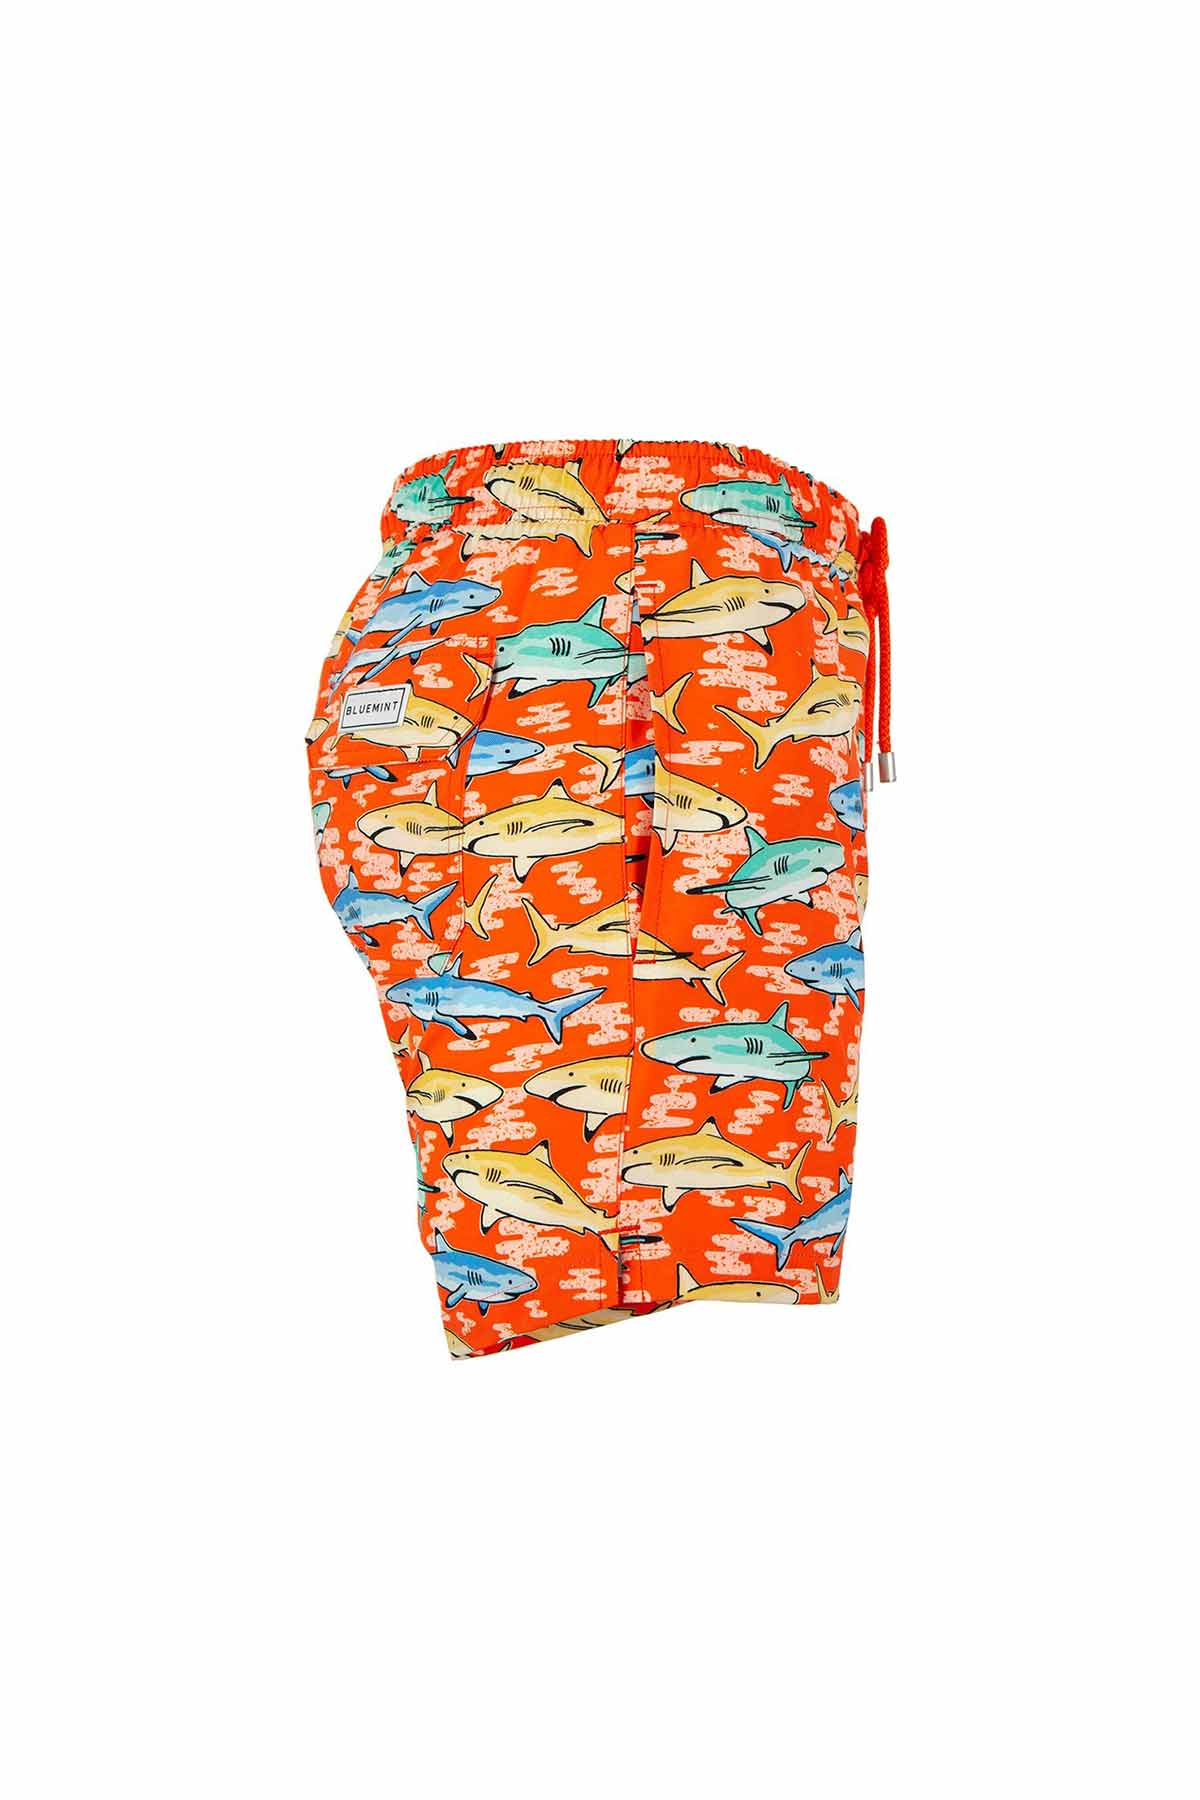 Bluemint Arthus Stretch Orange Shark Şort Mayo-Libas Trendy Fashion Store